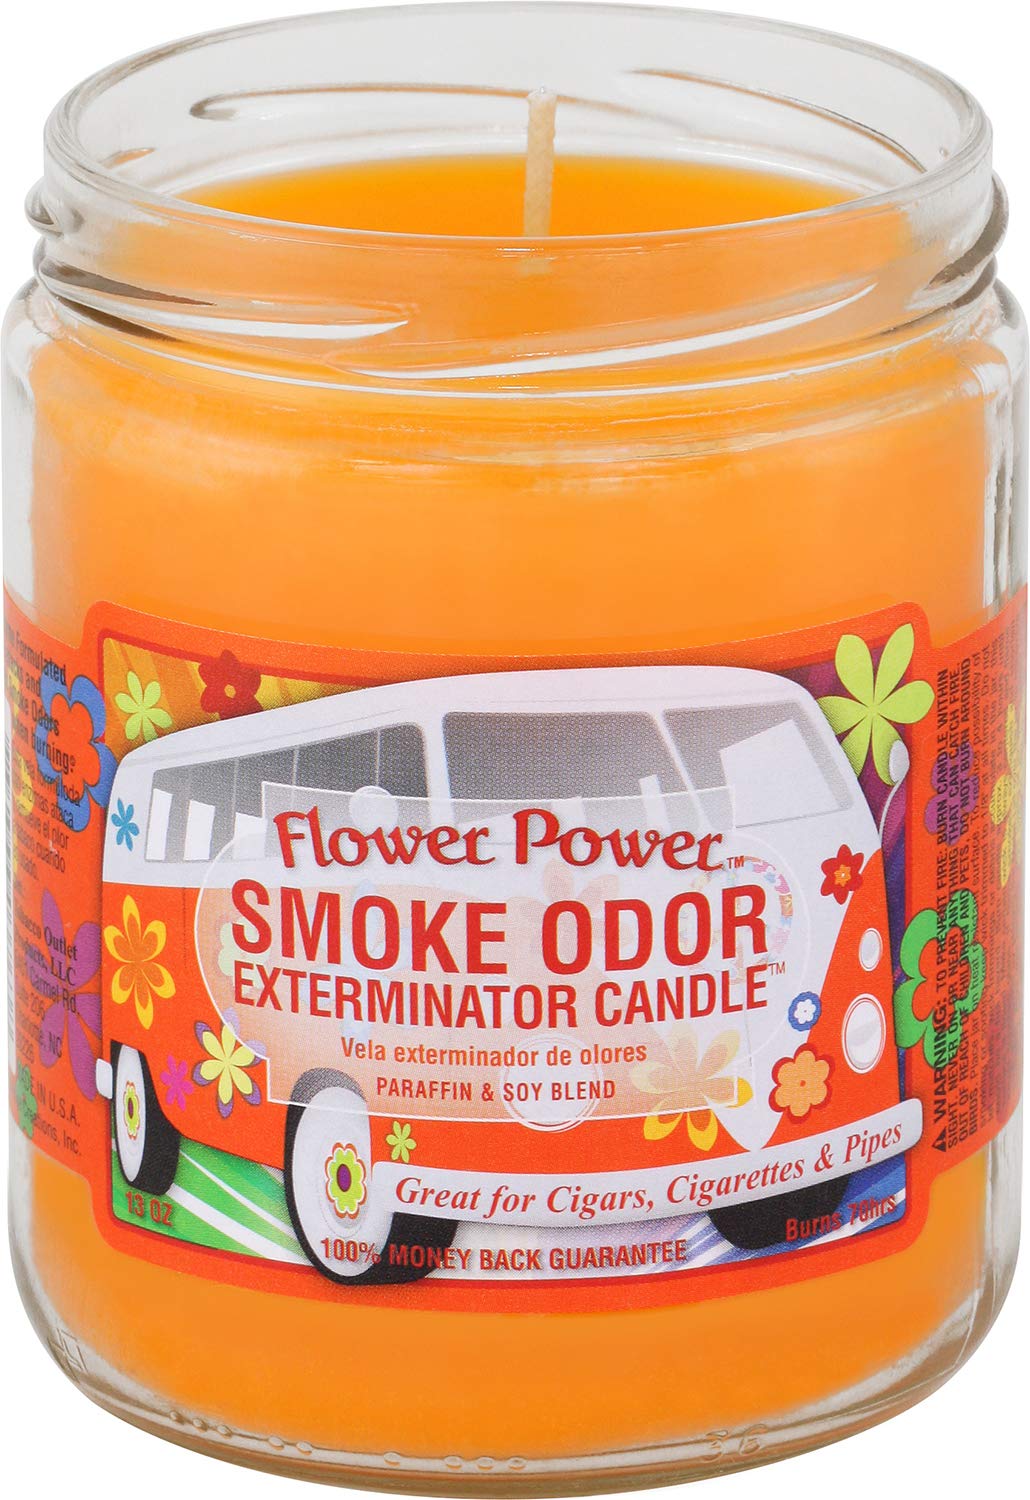 Smoke Odor Candles 13oz Flower powe